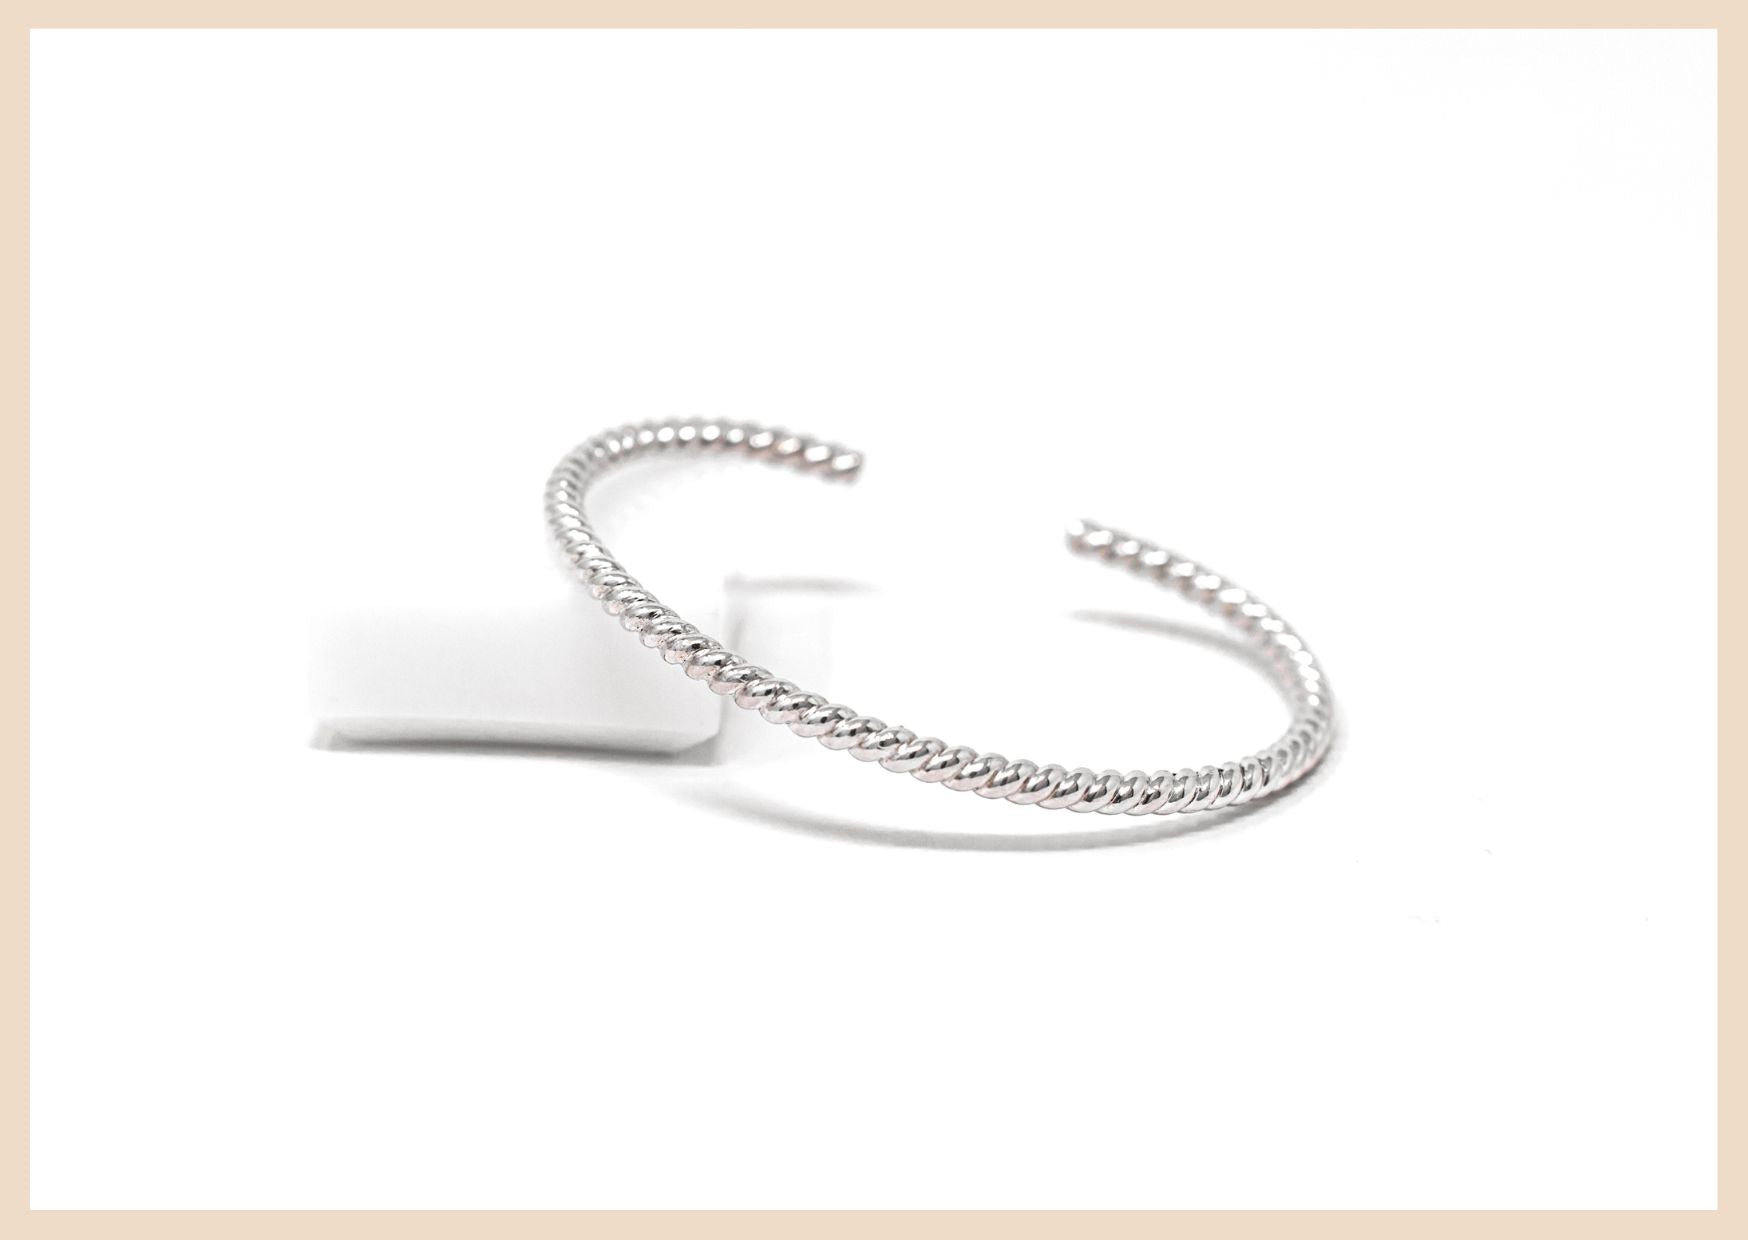 Woven Sterling Silver Bangle Cuff Bracelet